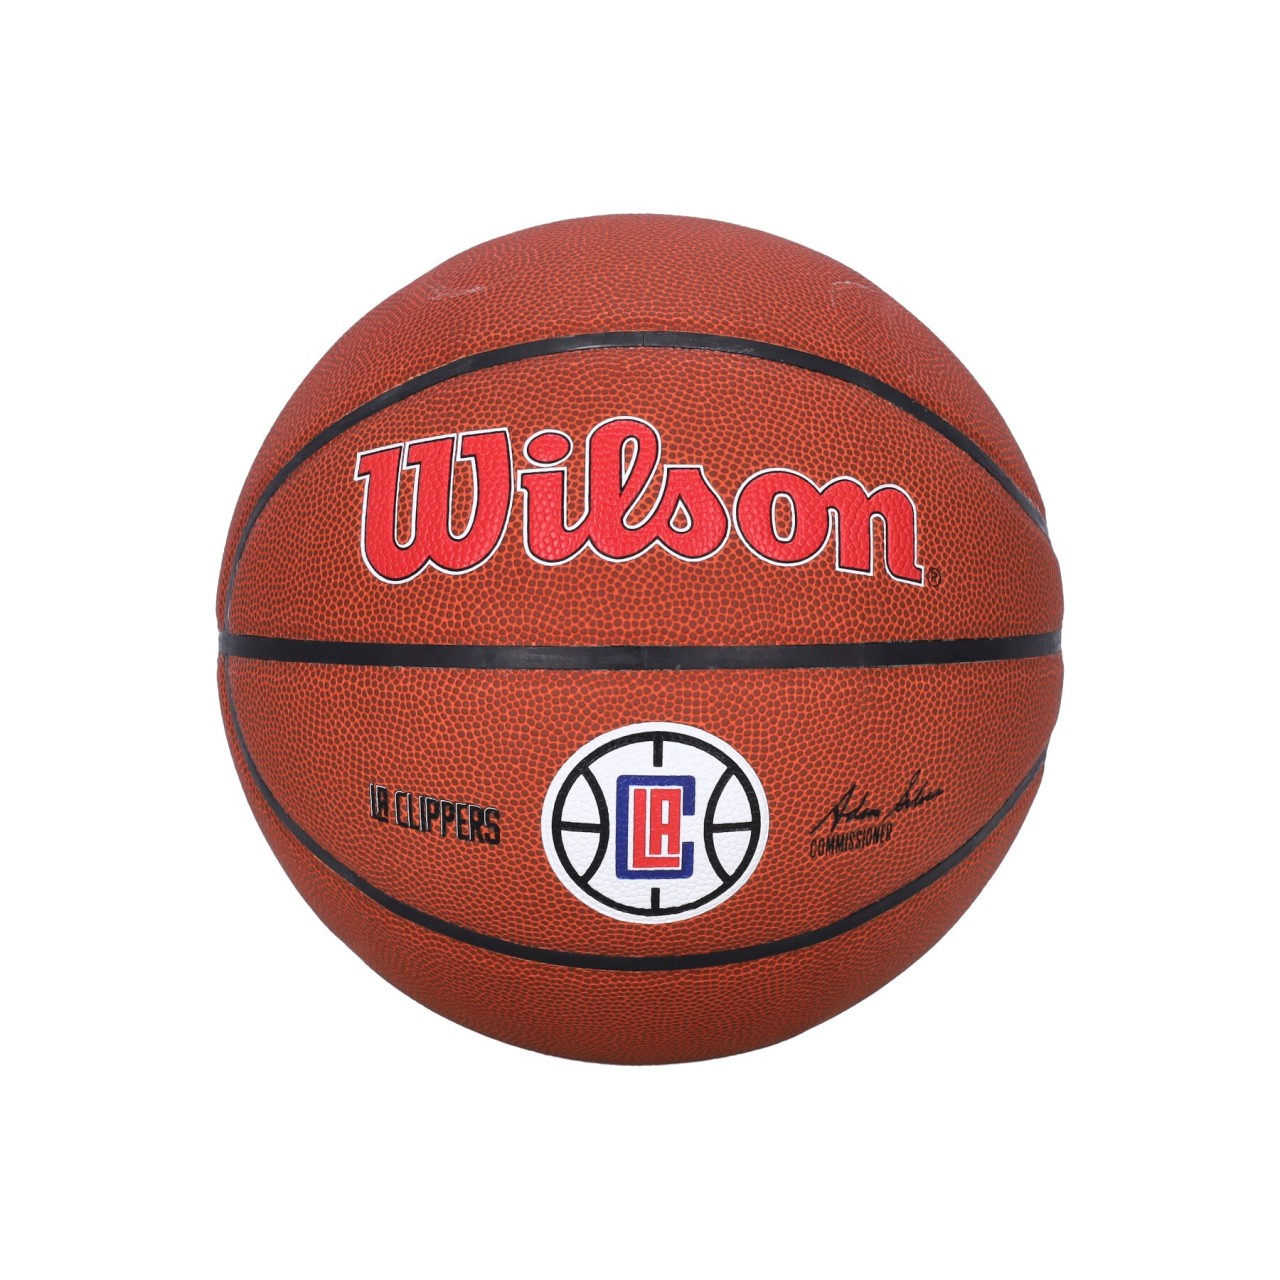 WILSON TEAM NBA TEAM ALLIANCE BASKETBALL SIZE 7 LOSCLI WTB3100XBLAC